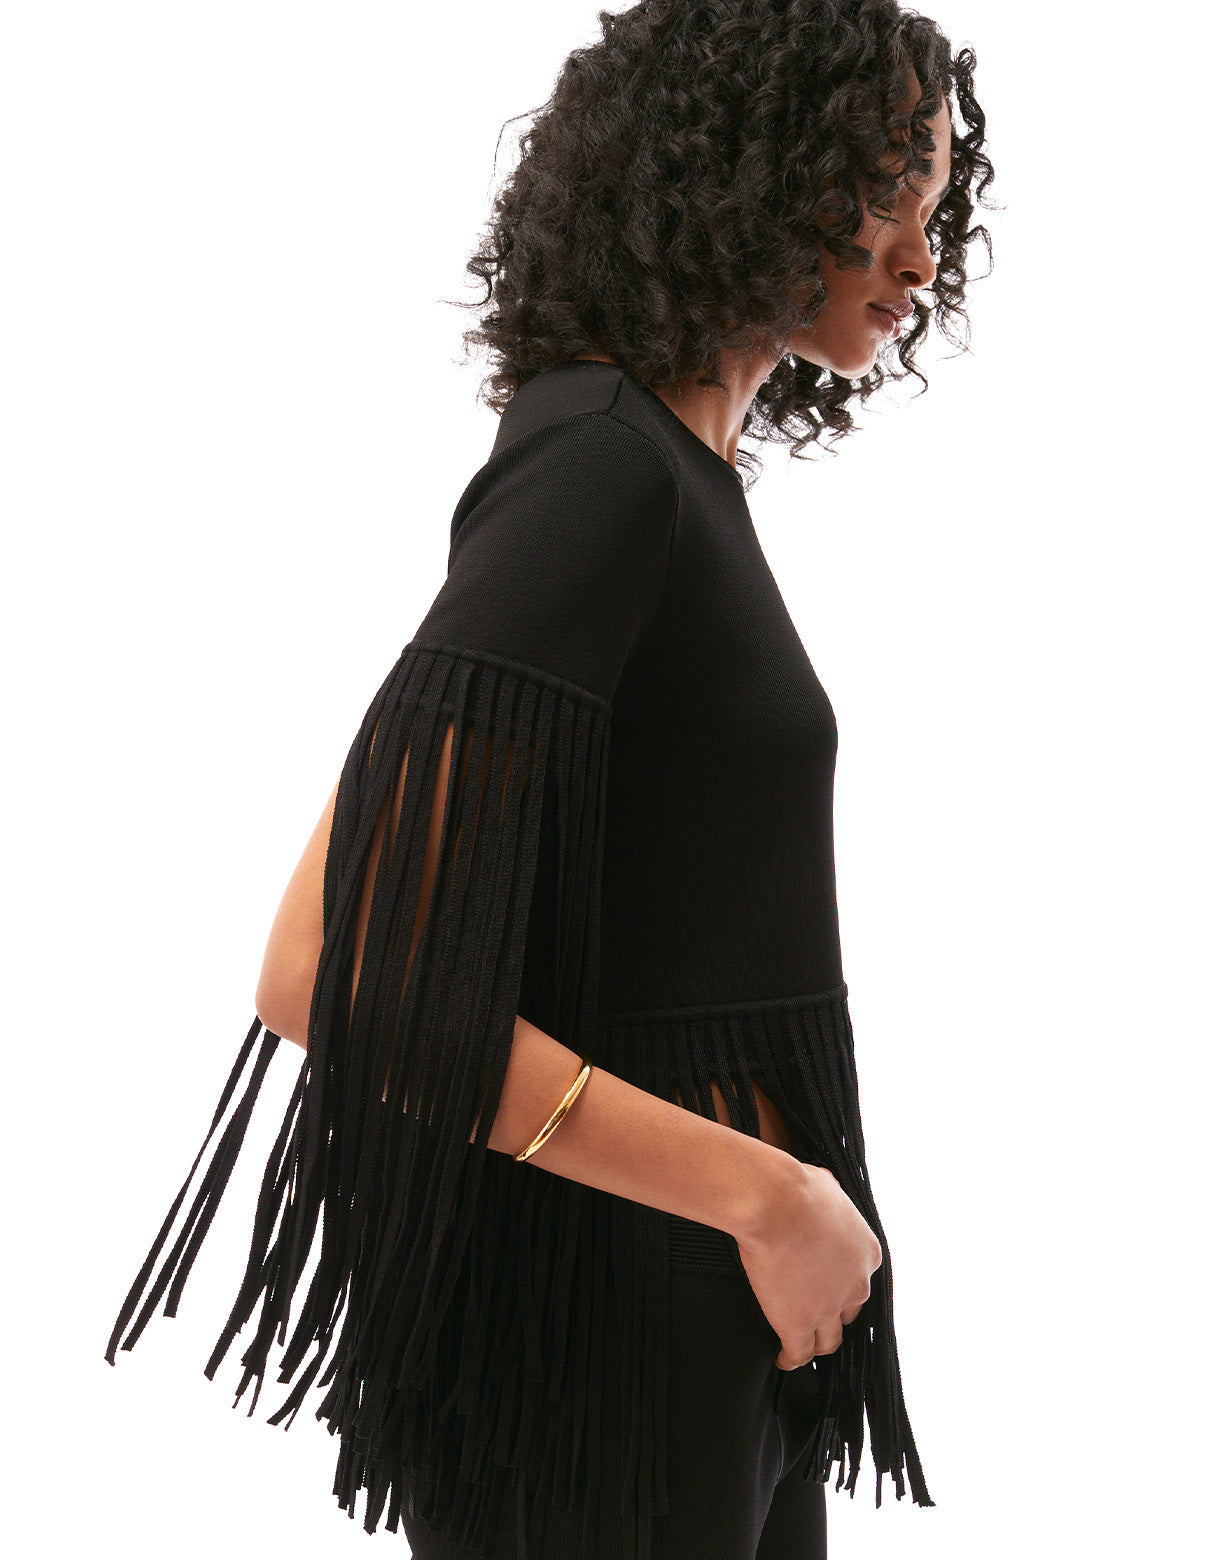 catalina fringe tee knit designer fashion top jet black - flattering fashion women's fun party tops 